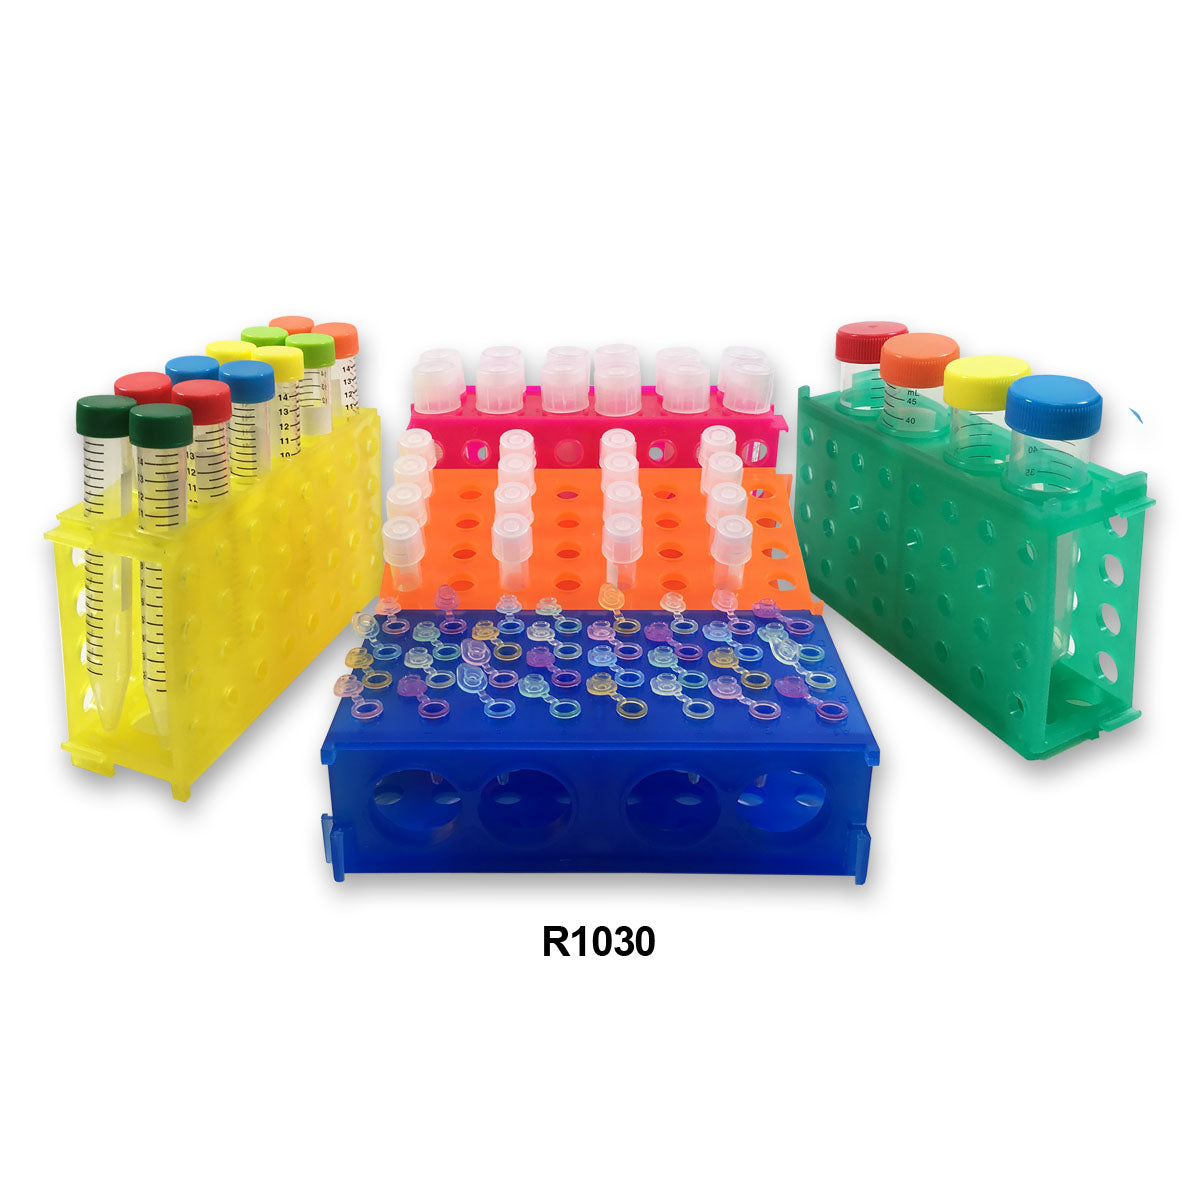 MTC Bio R1030, Rack, 4 Way (4x50, 12x15, 32x1.5/0.5ml), Rainbow Pack, 5/pk